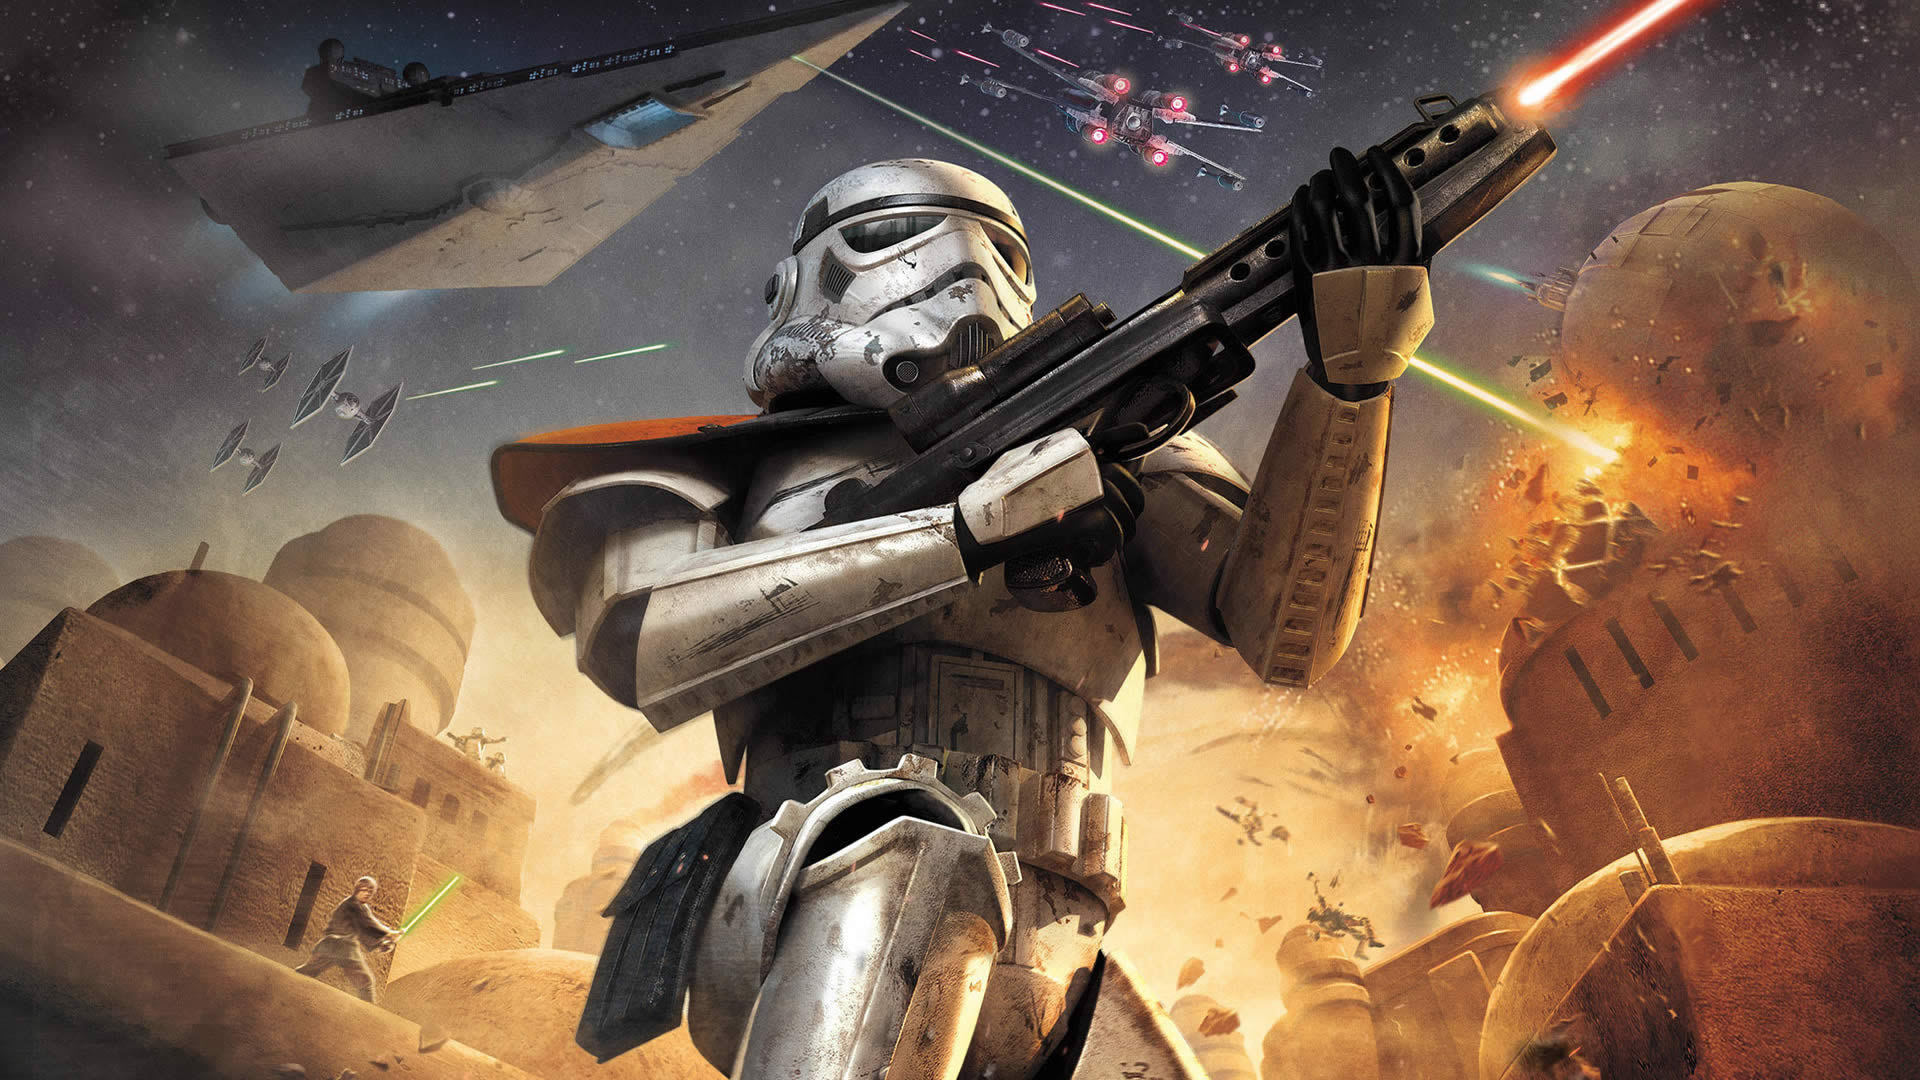 Star Wars Battlefront Elite Squadron Wallpaper